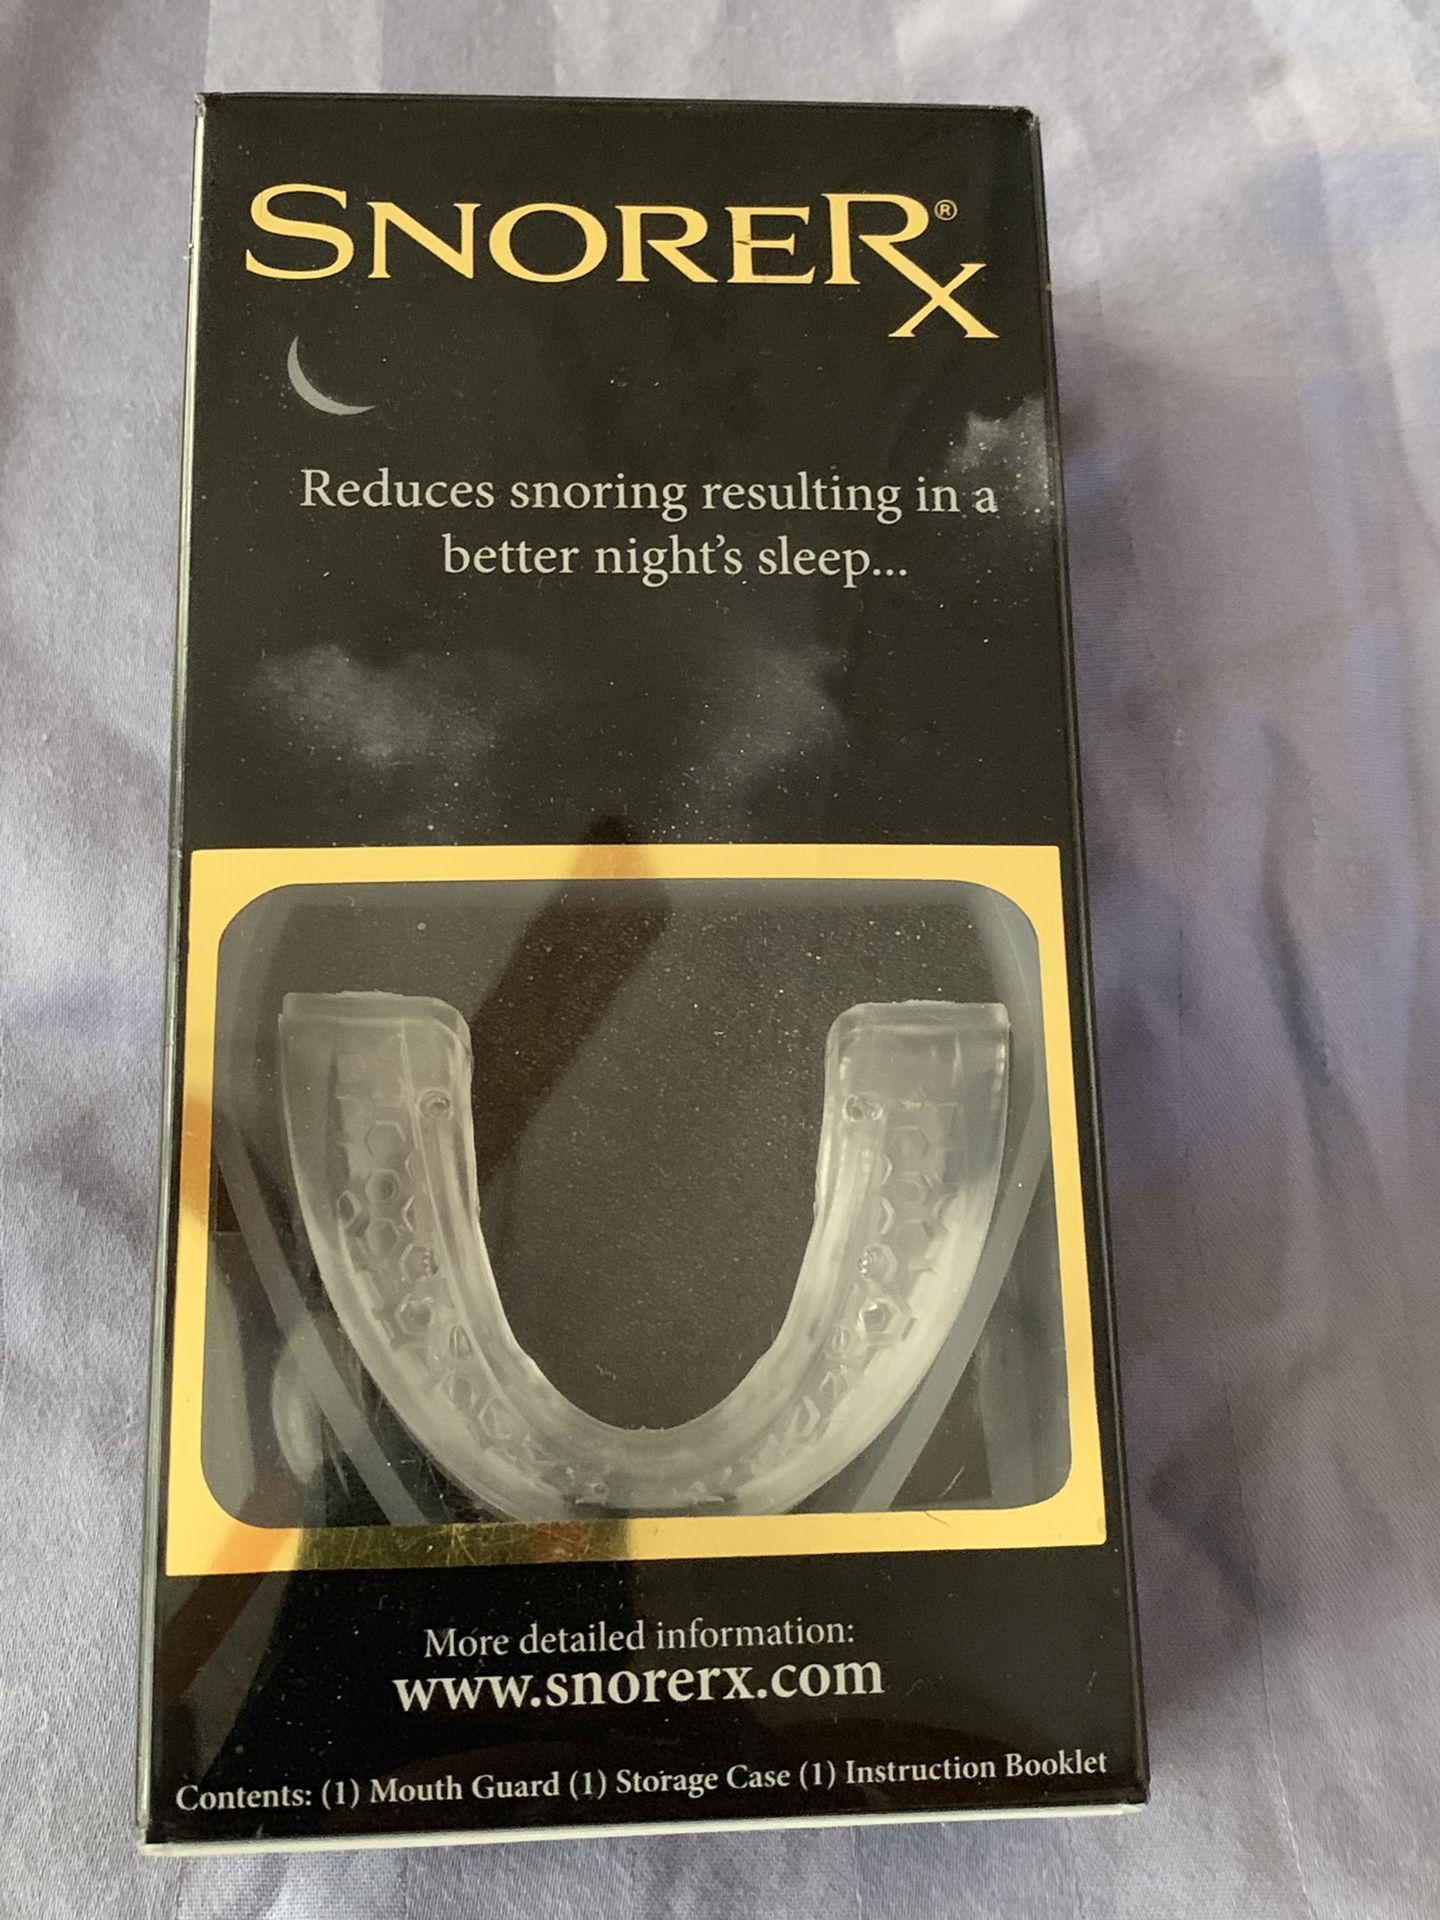 New sealed SnorerX Reduce snoring better nights sleep.